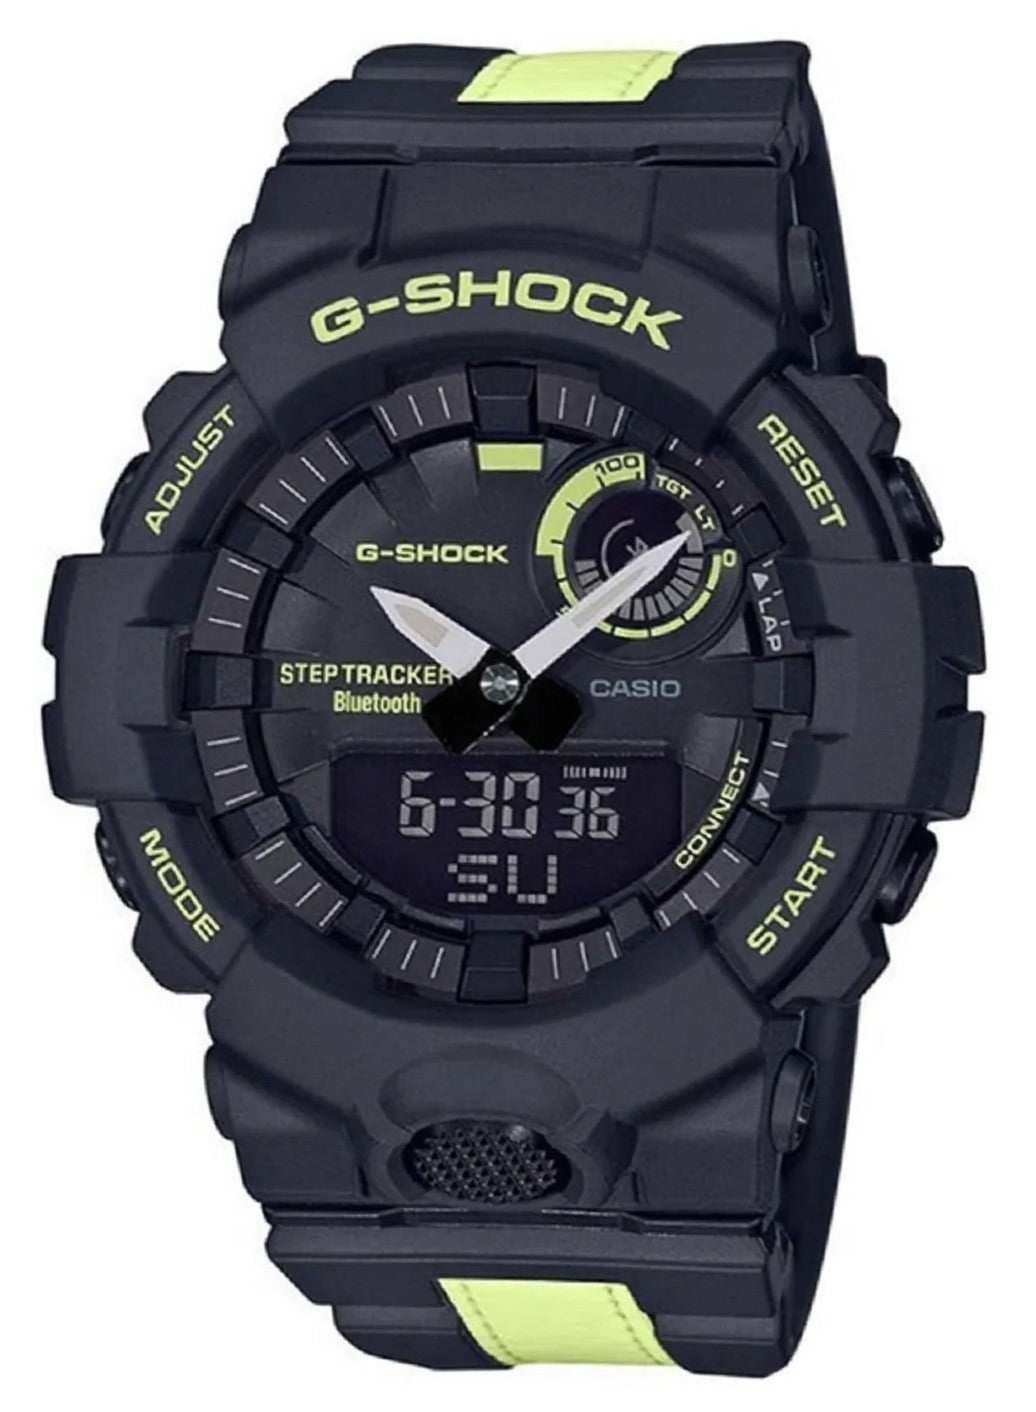 Casio G-shock GBA-800LU-1A1 Bluetooth Digital Analog Rubber Strap Watch For Men-Watch Portal Philippines